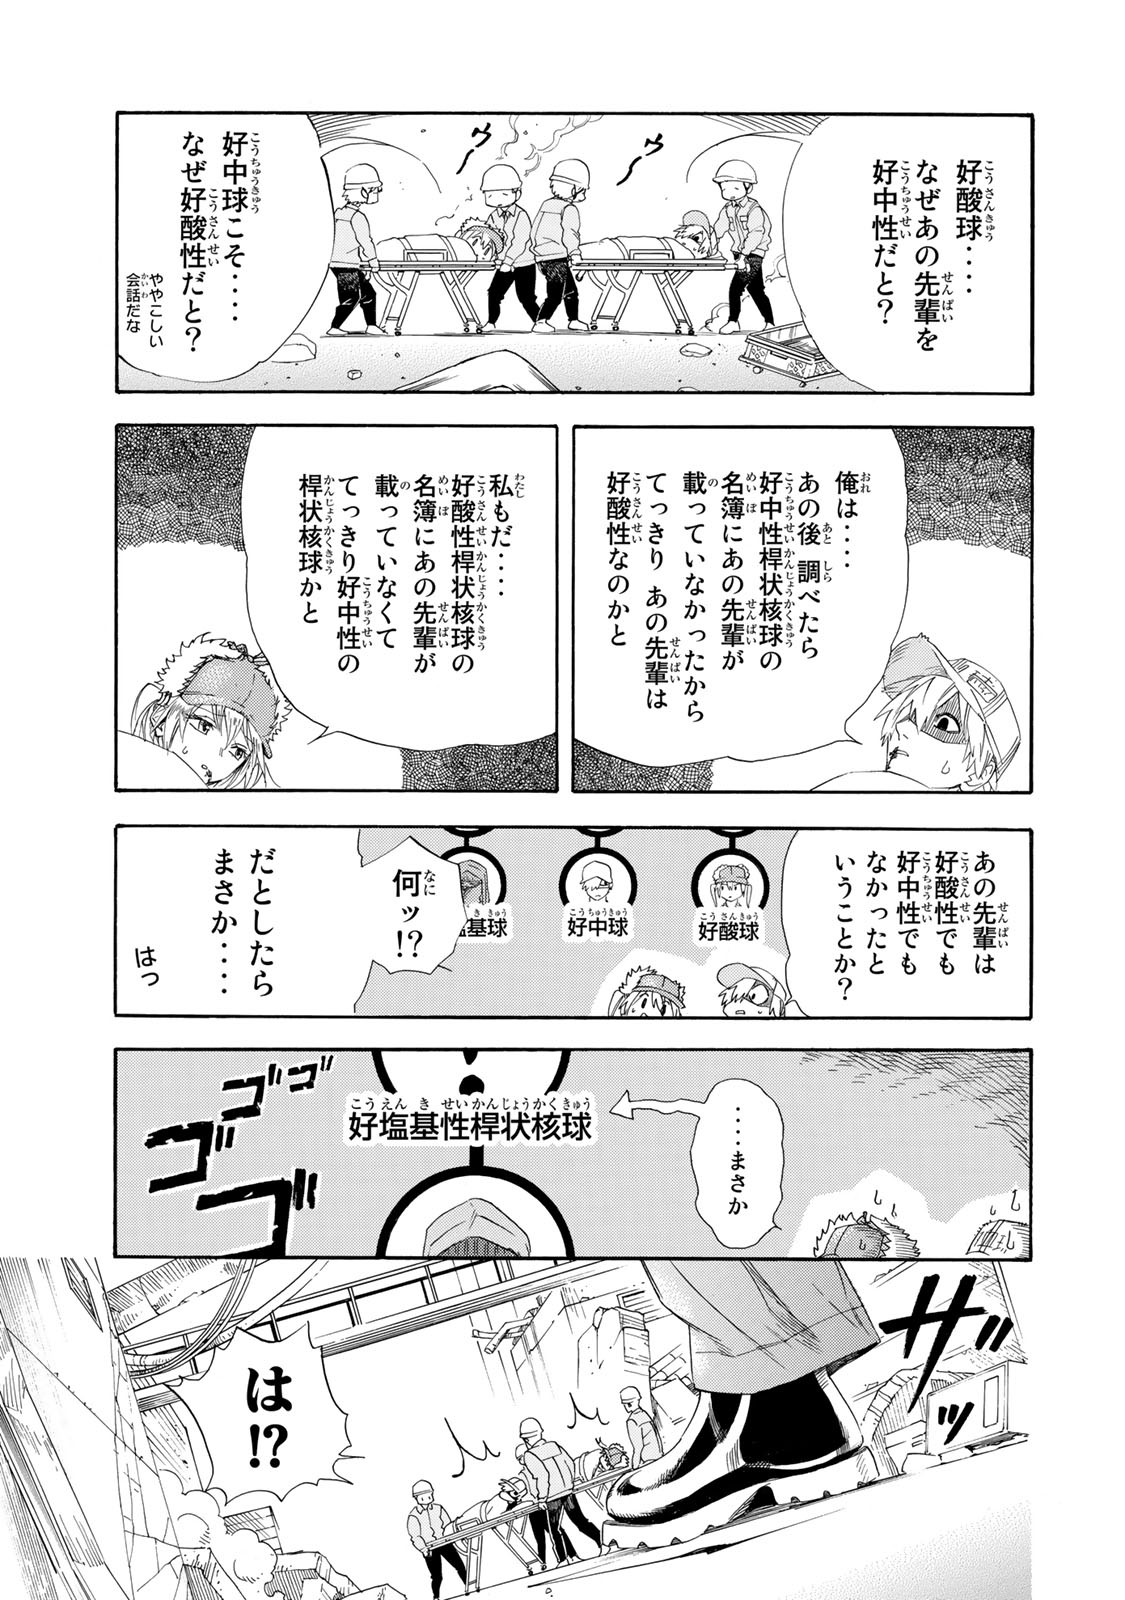 Hataraku Saibou - Chapter 27 - Page 15